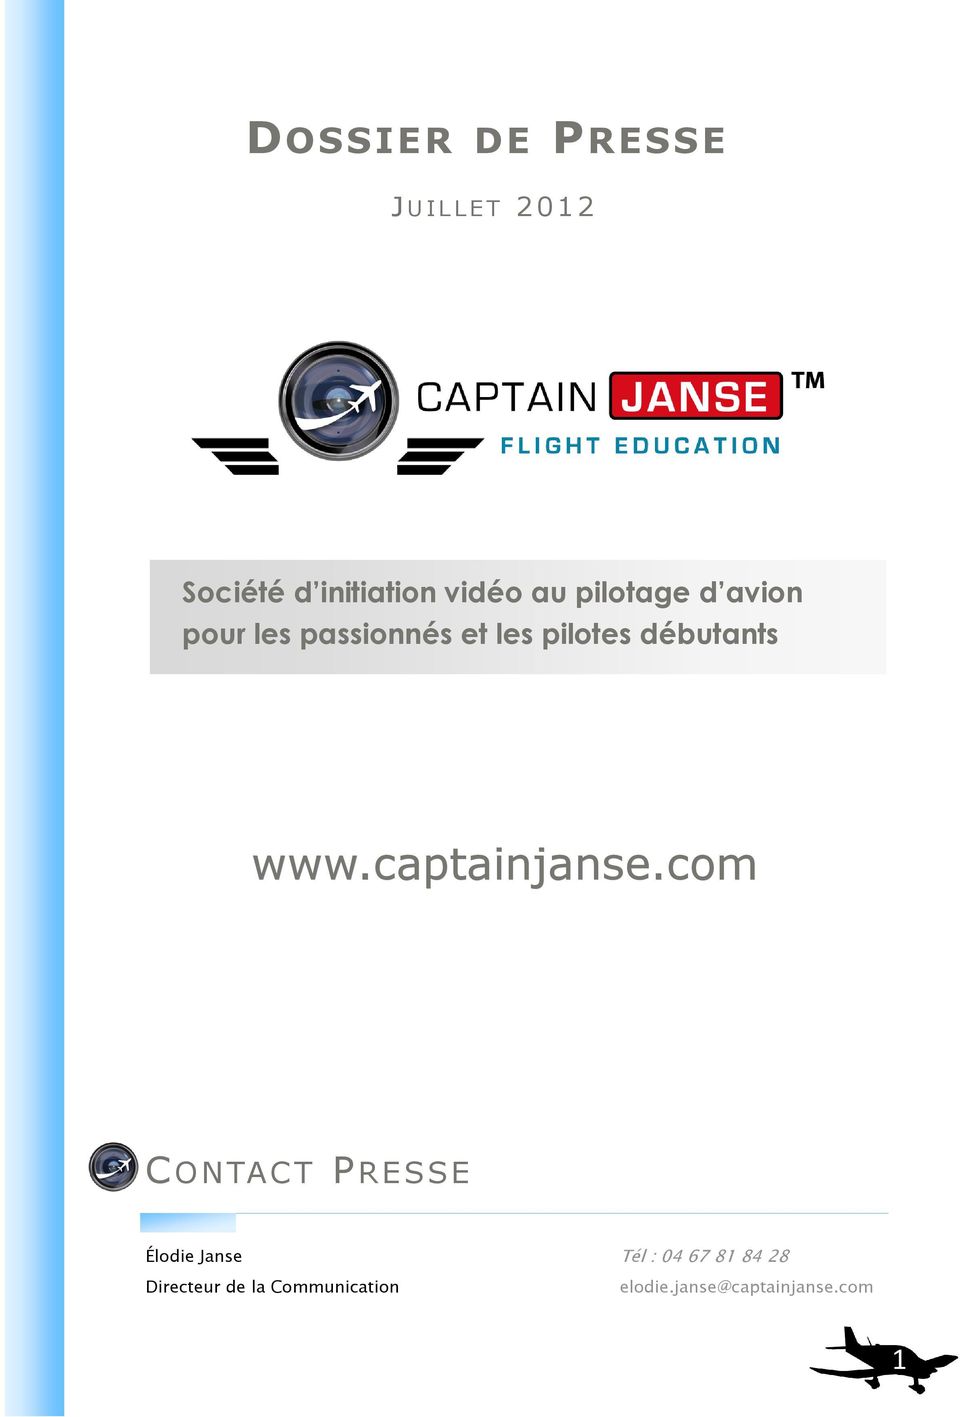 www.captainjanse.